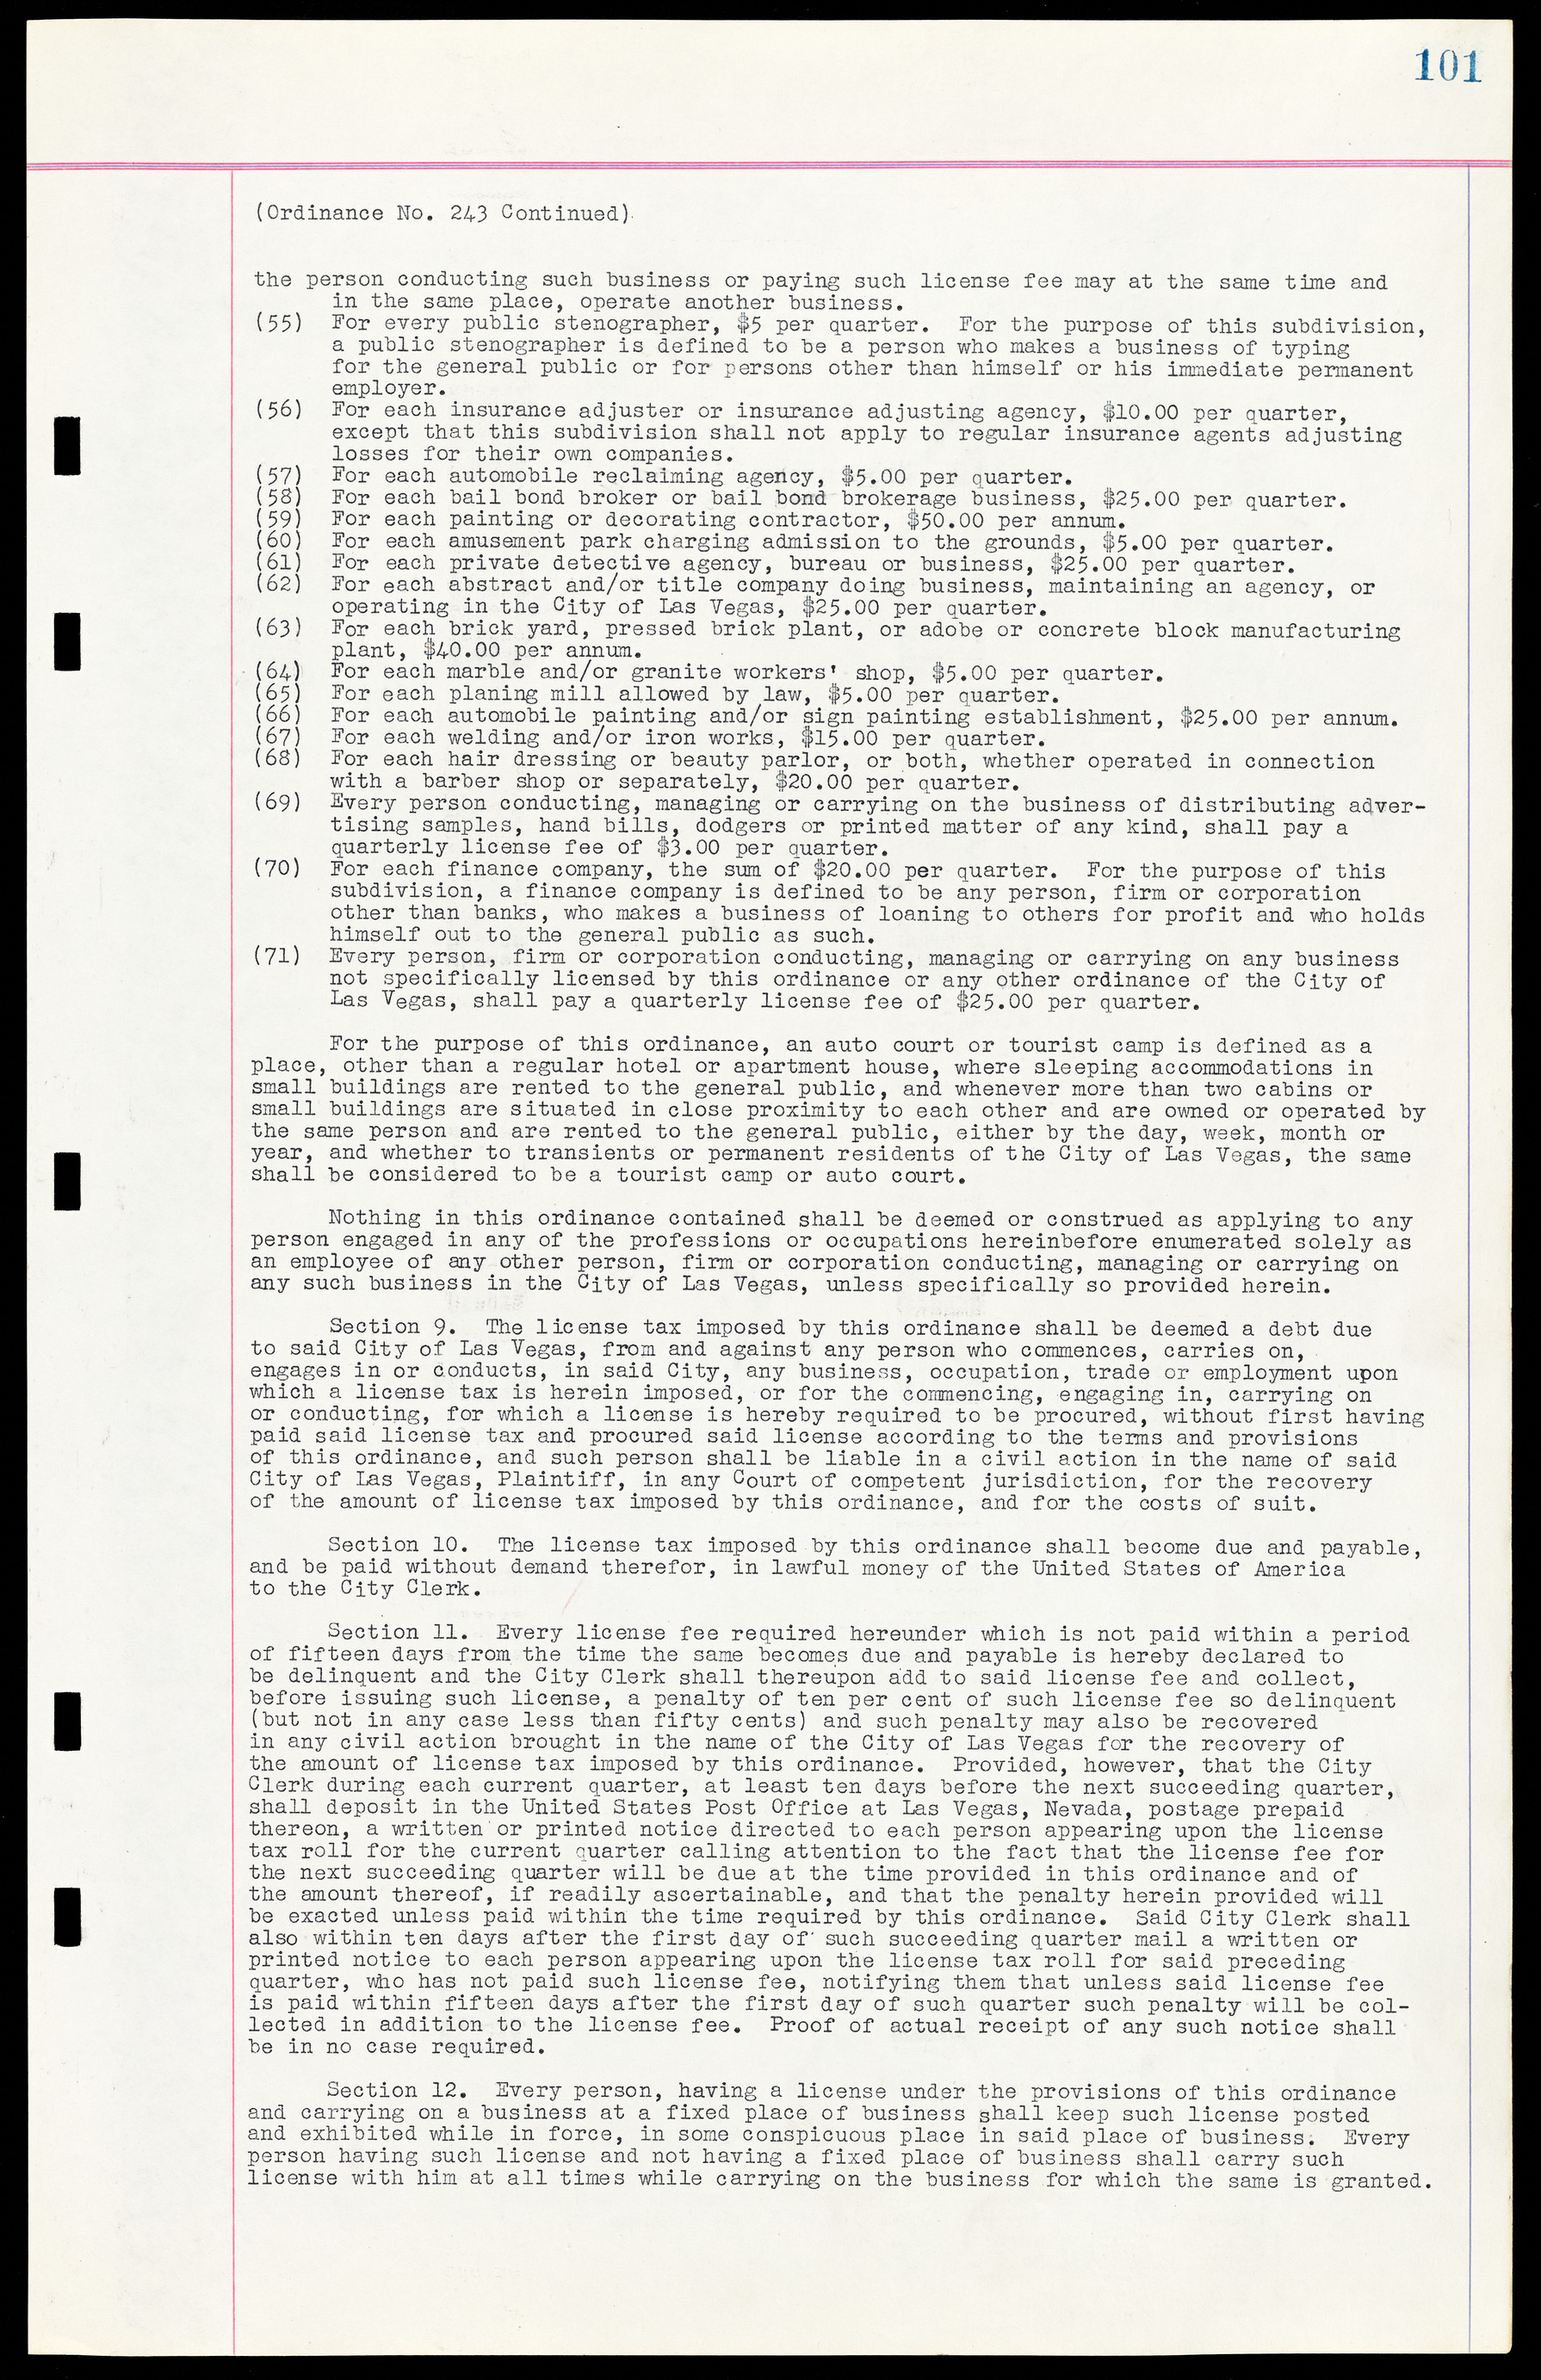 Las Vegas City Ordinances, March 31, 1933 to October 25, 1950, lvc000014-119